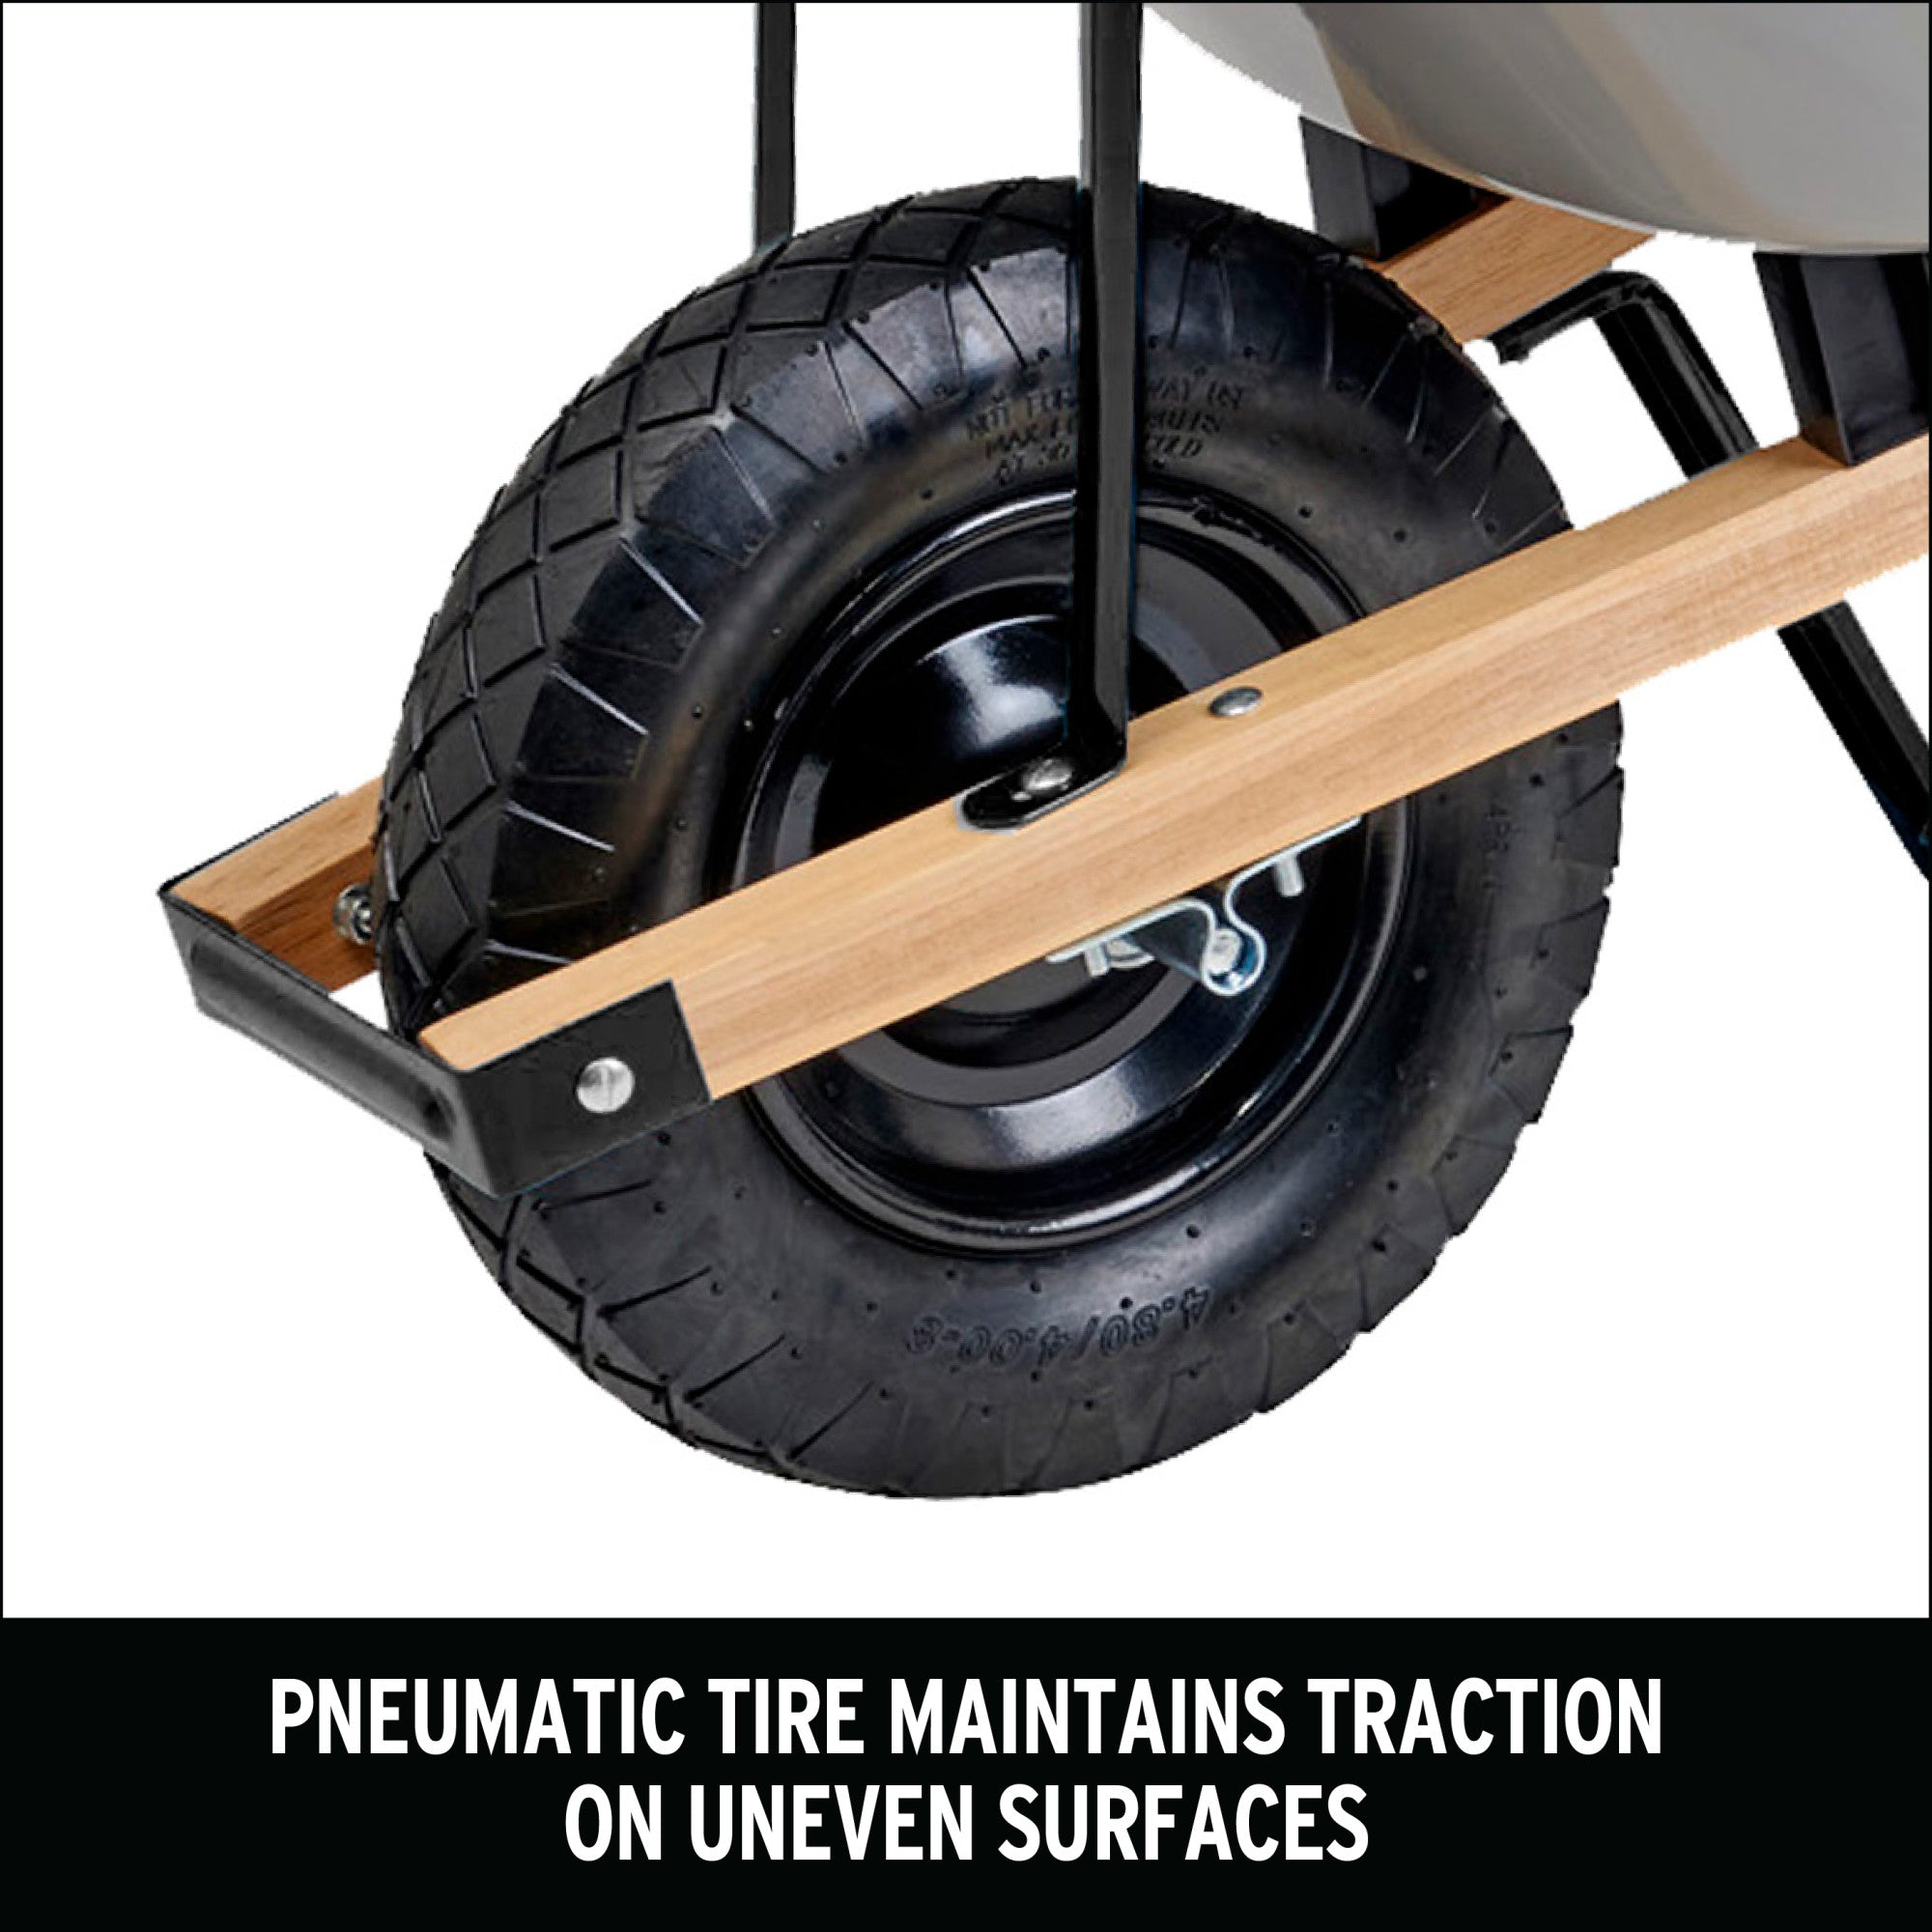 6 Cu. Ft. Steel Wheelbarrow, Wood Handles, Pneumatic Tire